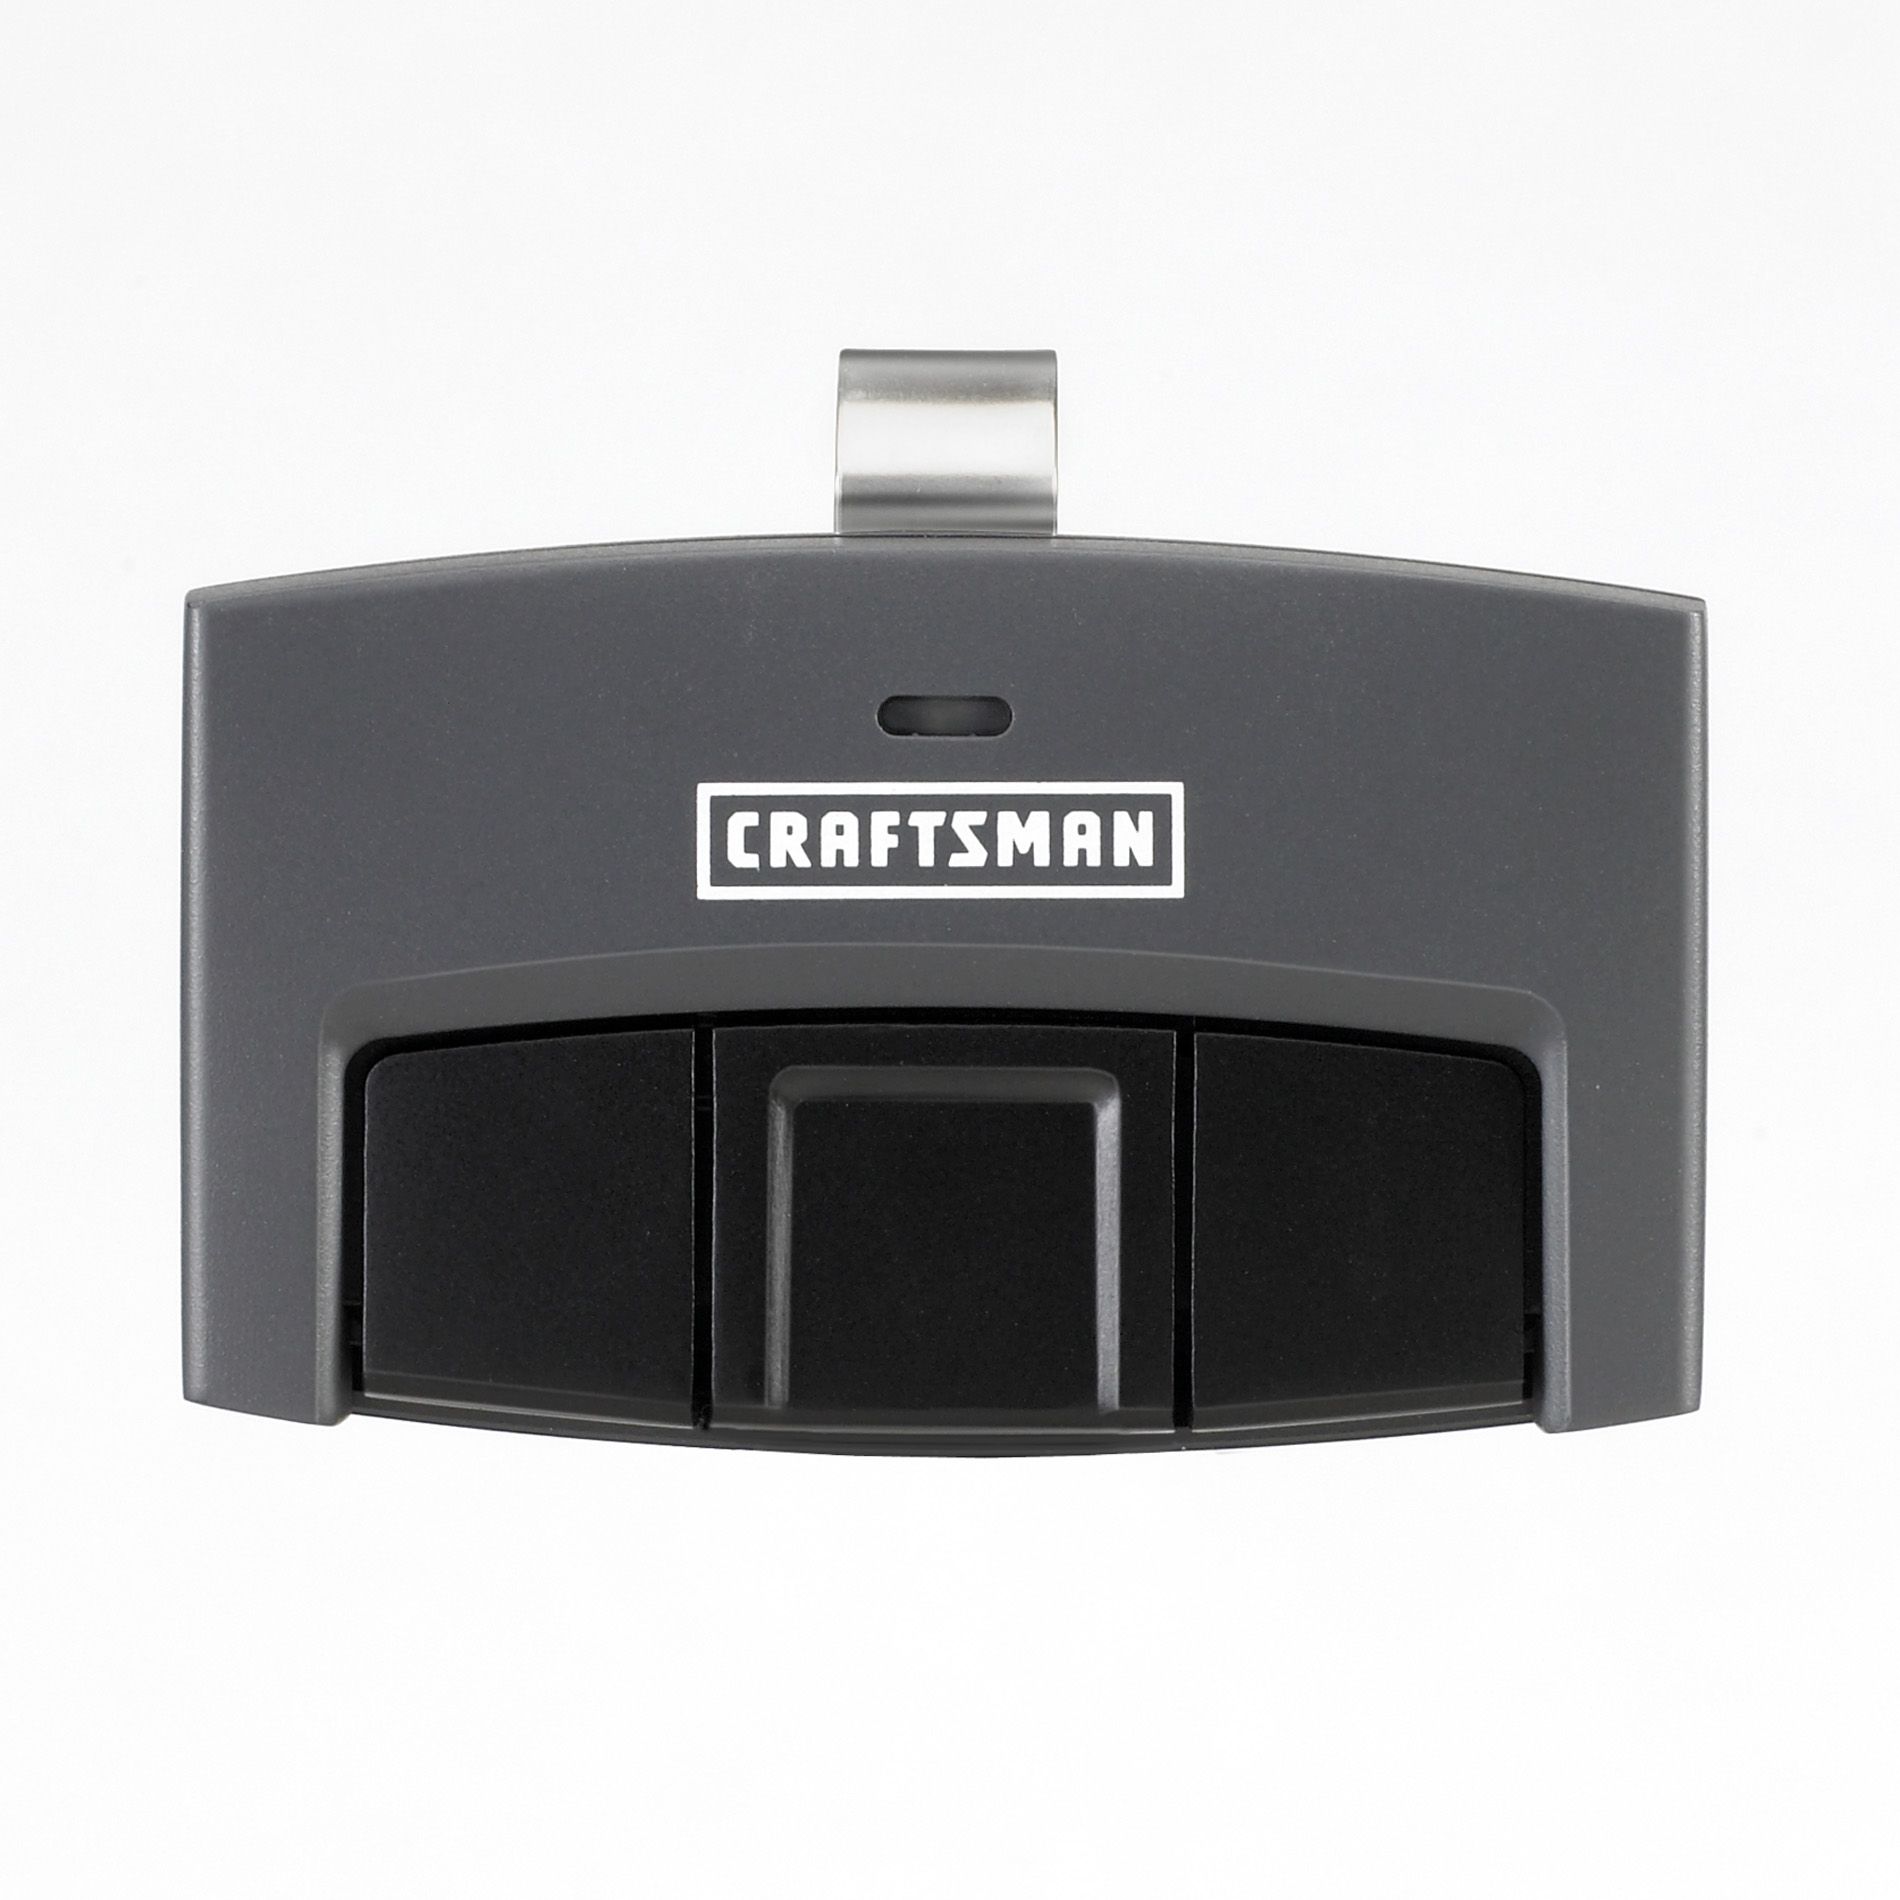 Craftsman Garage Door Opener 3Function Visor Remote Control Shop Your Way Online Shopping